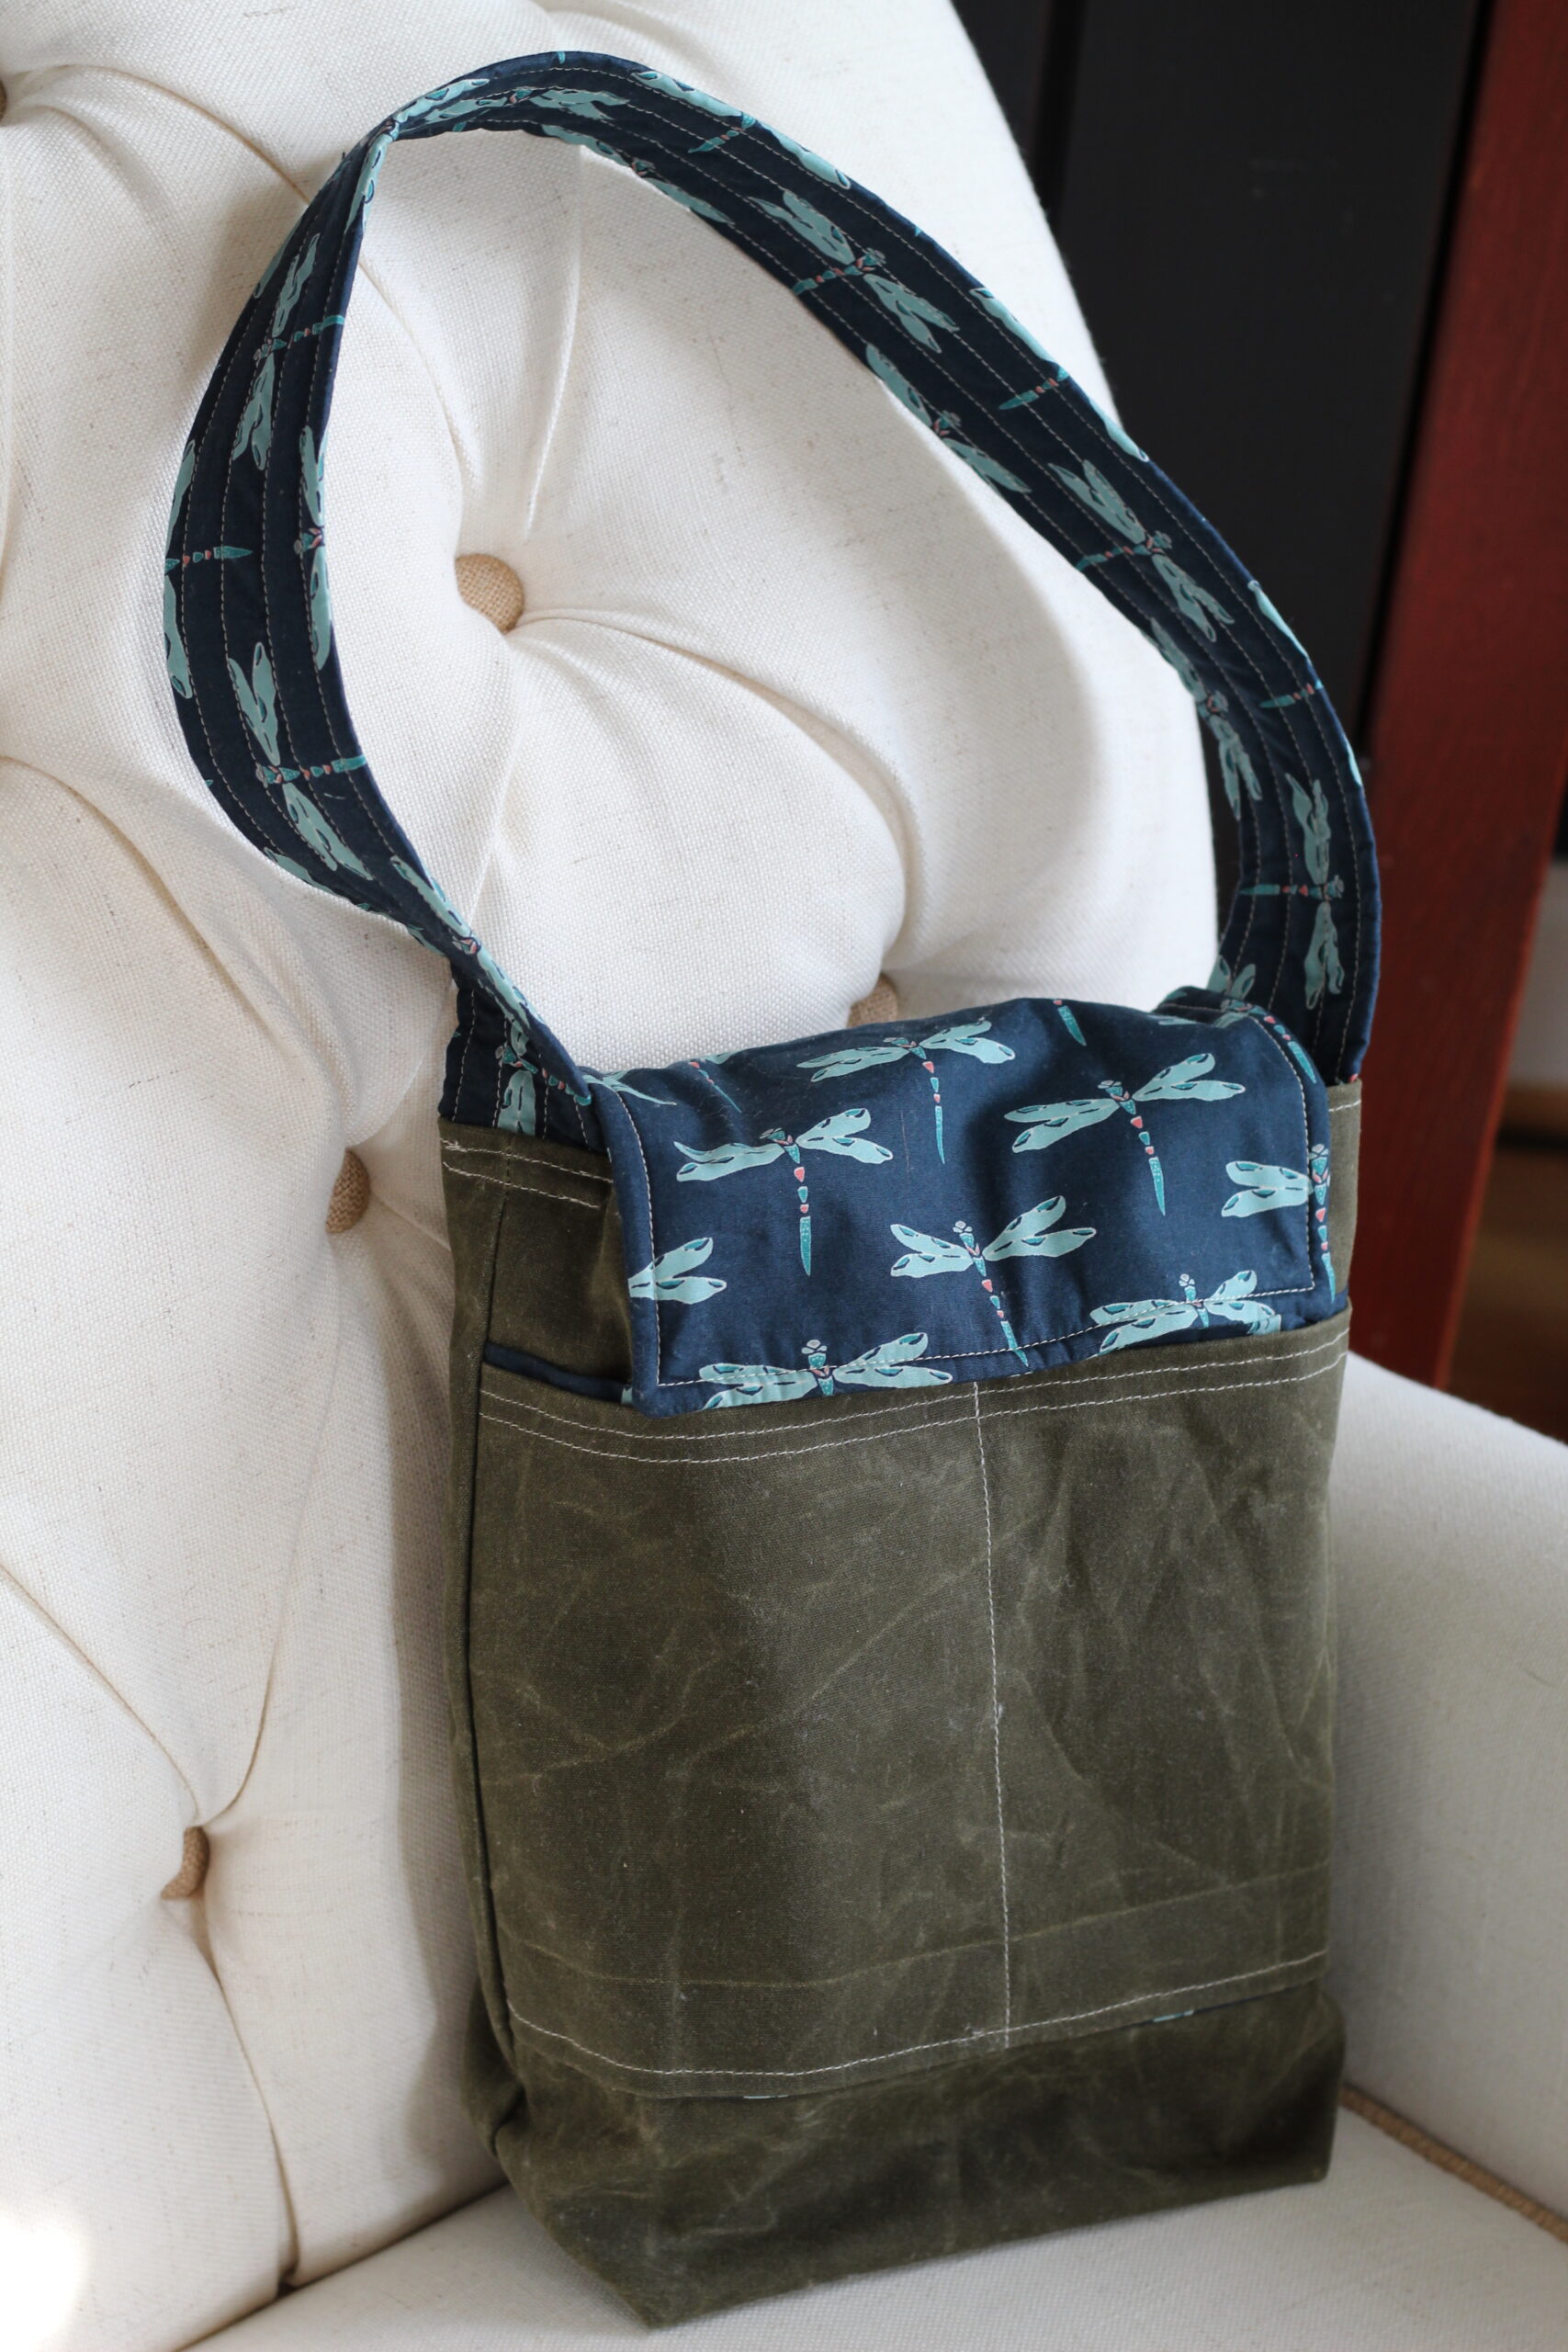 Sewspire Design Board #111020: How to sew a shoulder bag